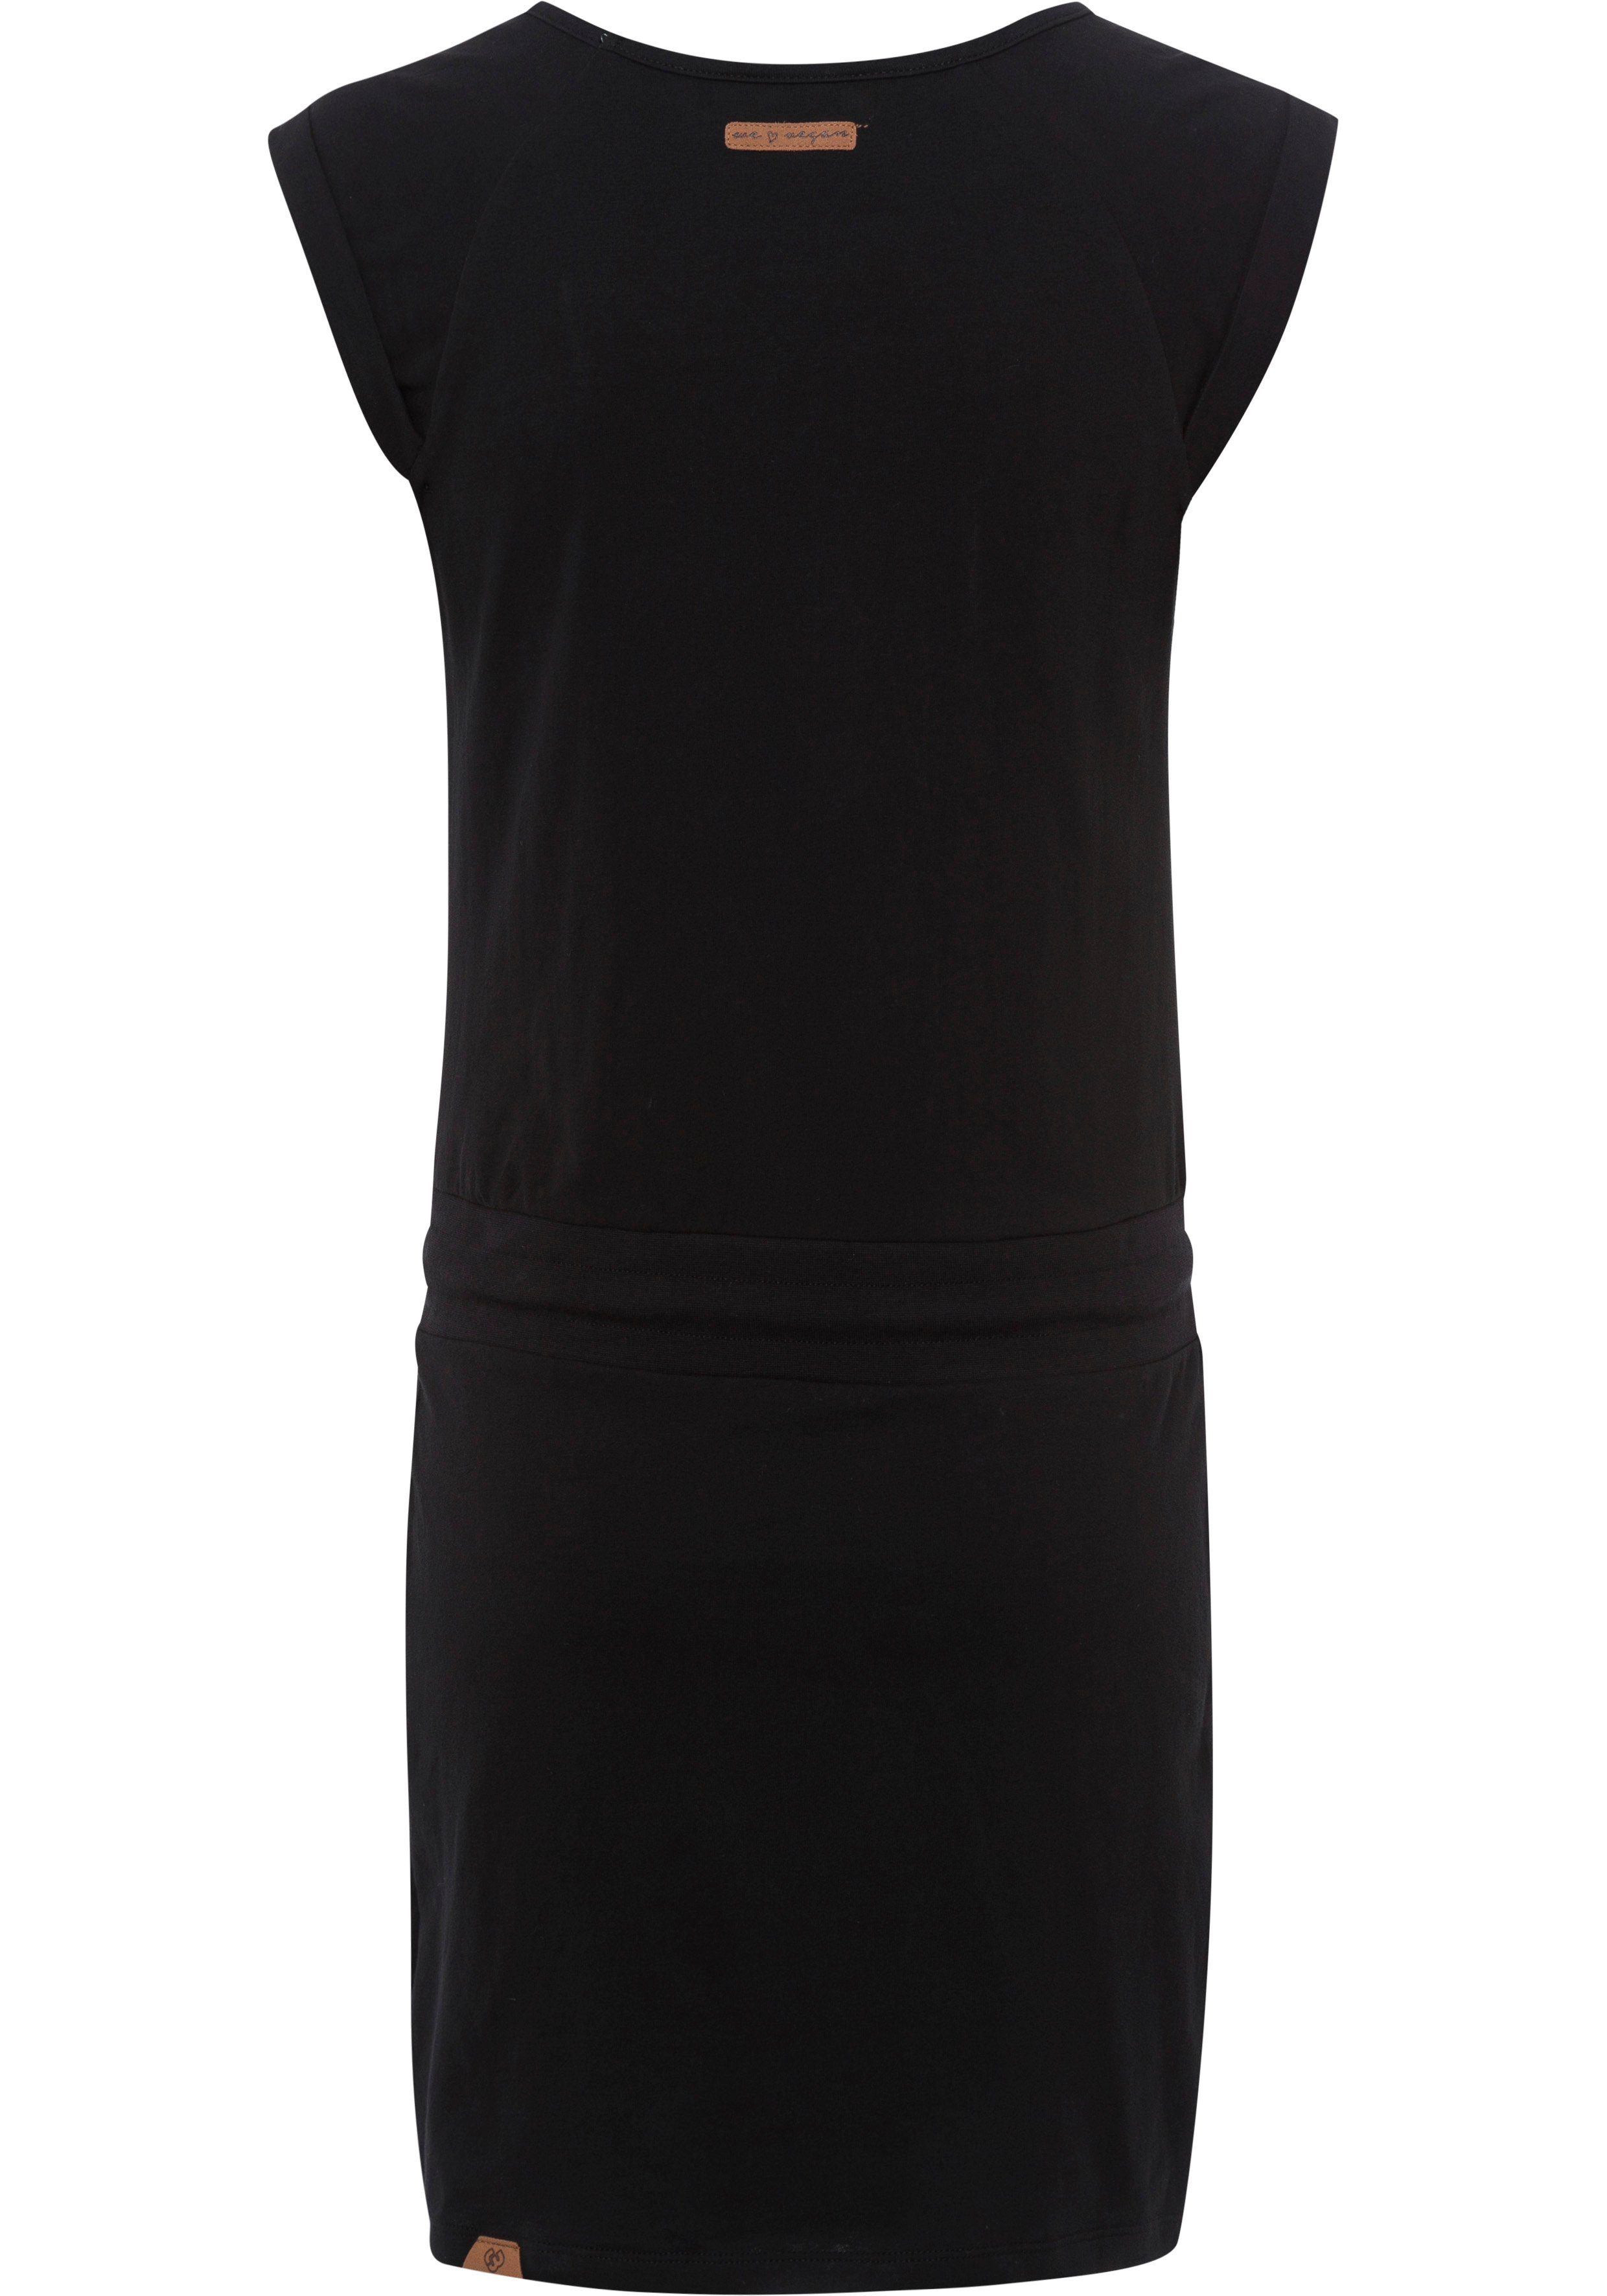 PENELOPE Kordelzug Jerseykleid Zierperlen-Besatz kontrastiven Ragwear und 1010 mit PRINT black